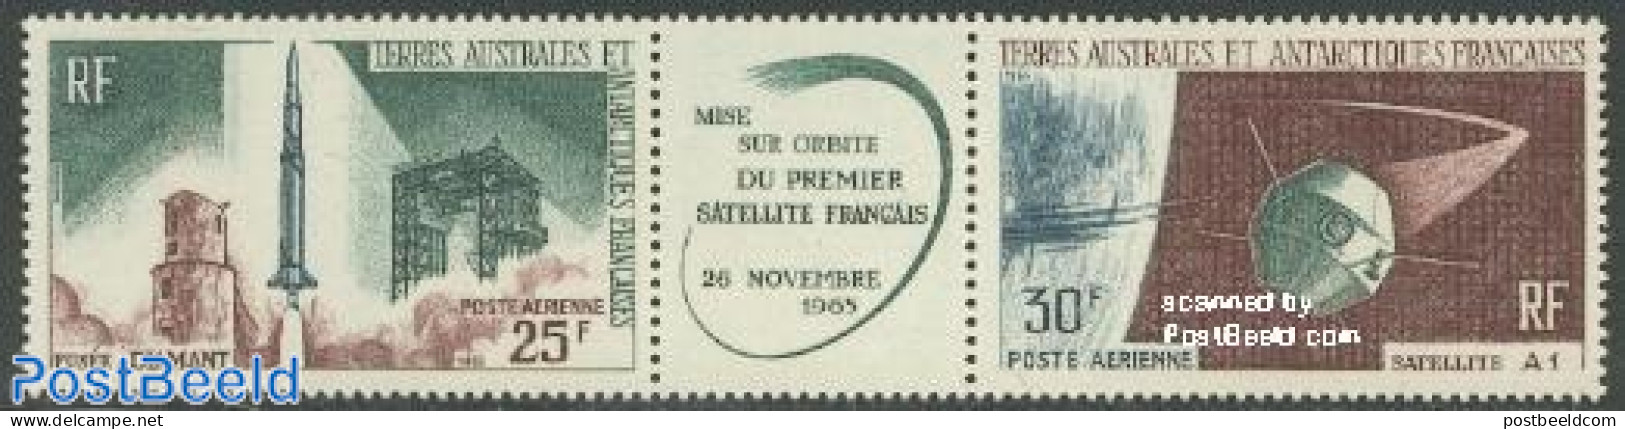 French Antarctic Territory 1966 Satellites 2v+tab [:T:], Unused (hinged), Transport - Various - Space Exploration - Jo.. - Nuevos